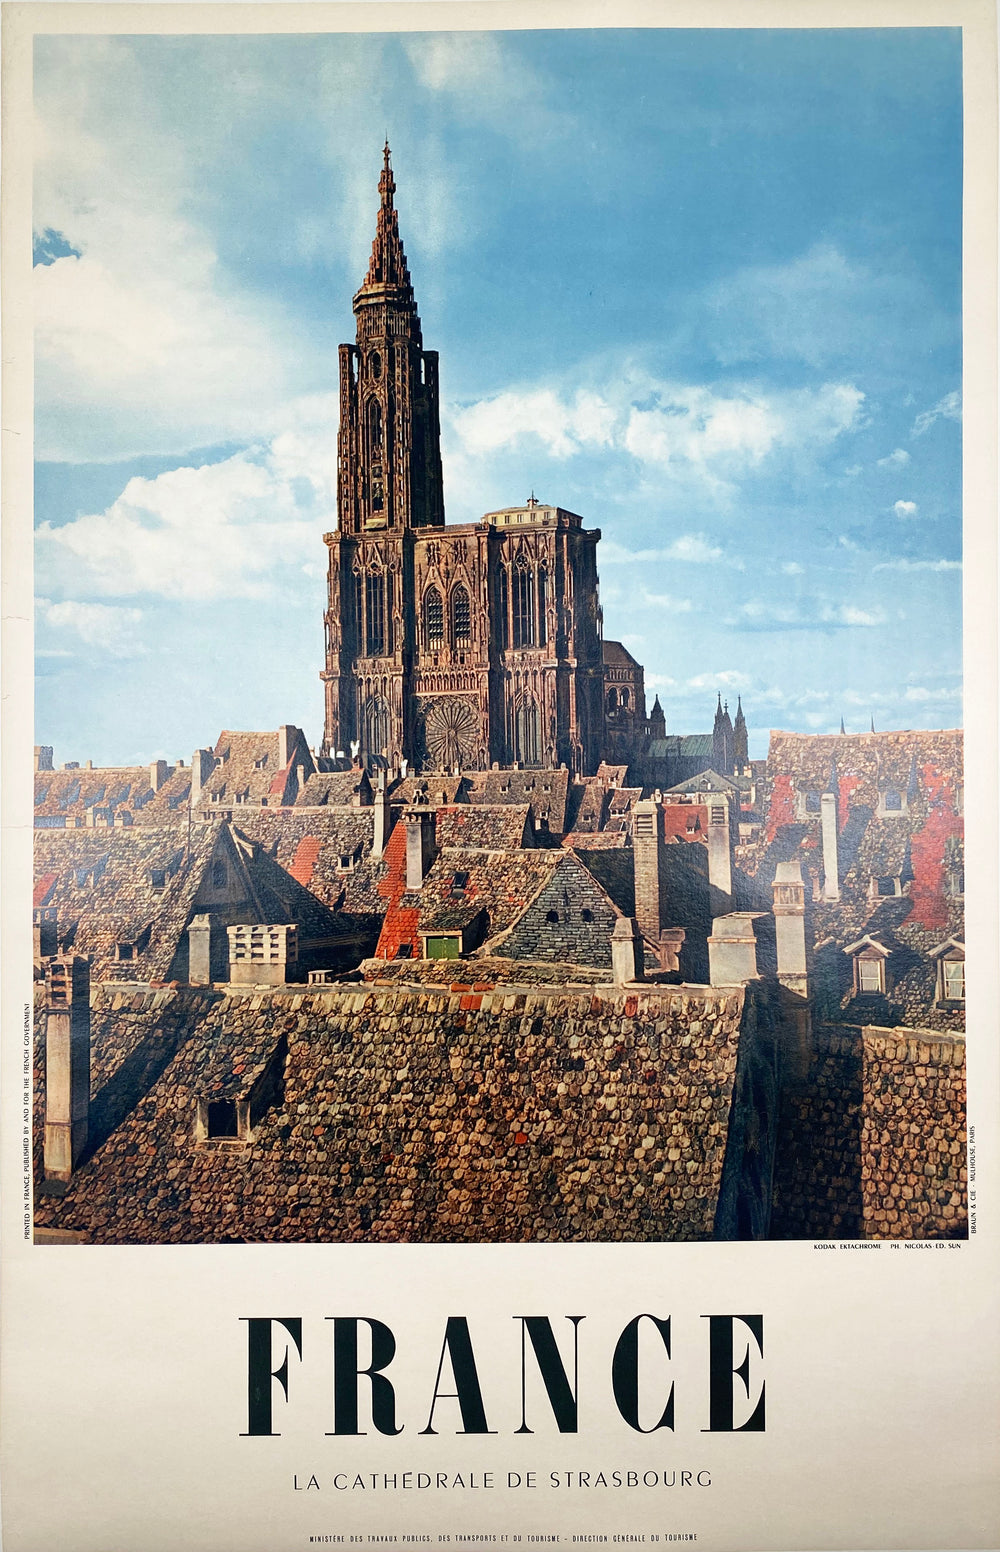 France - La Cathedrale de Strasbourg